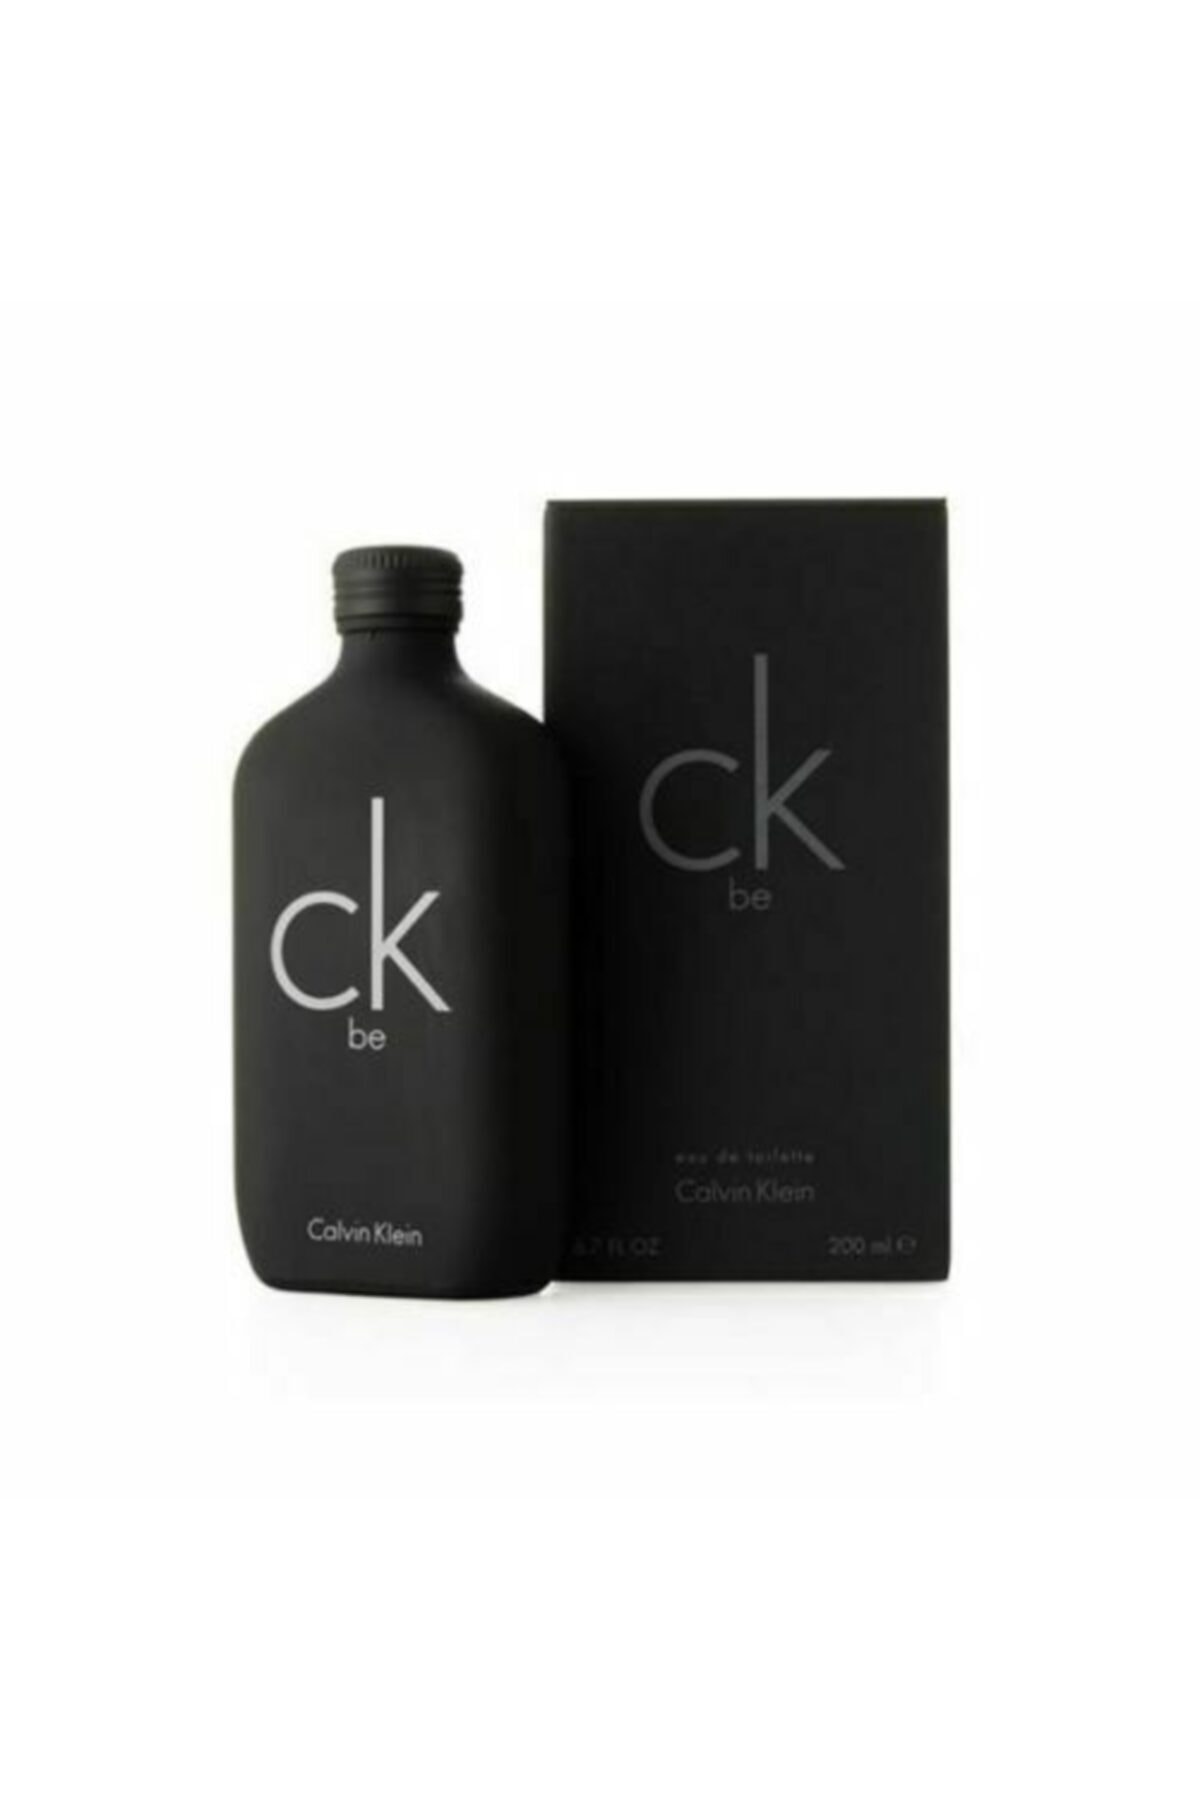 Calvin Klein Be Edt 200 ml یونیسکس Perfume 088300604432